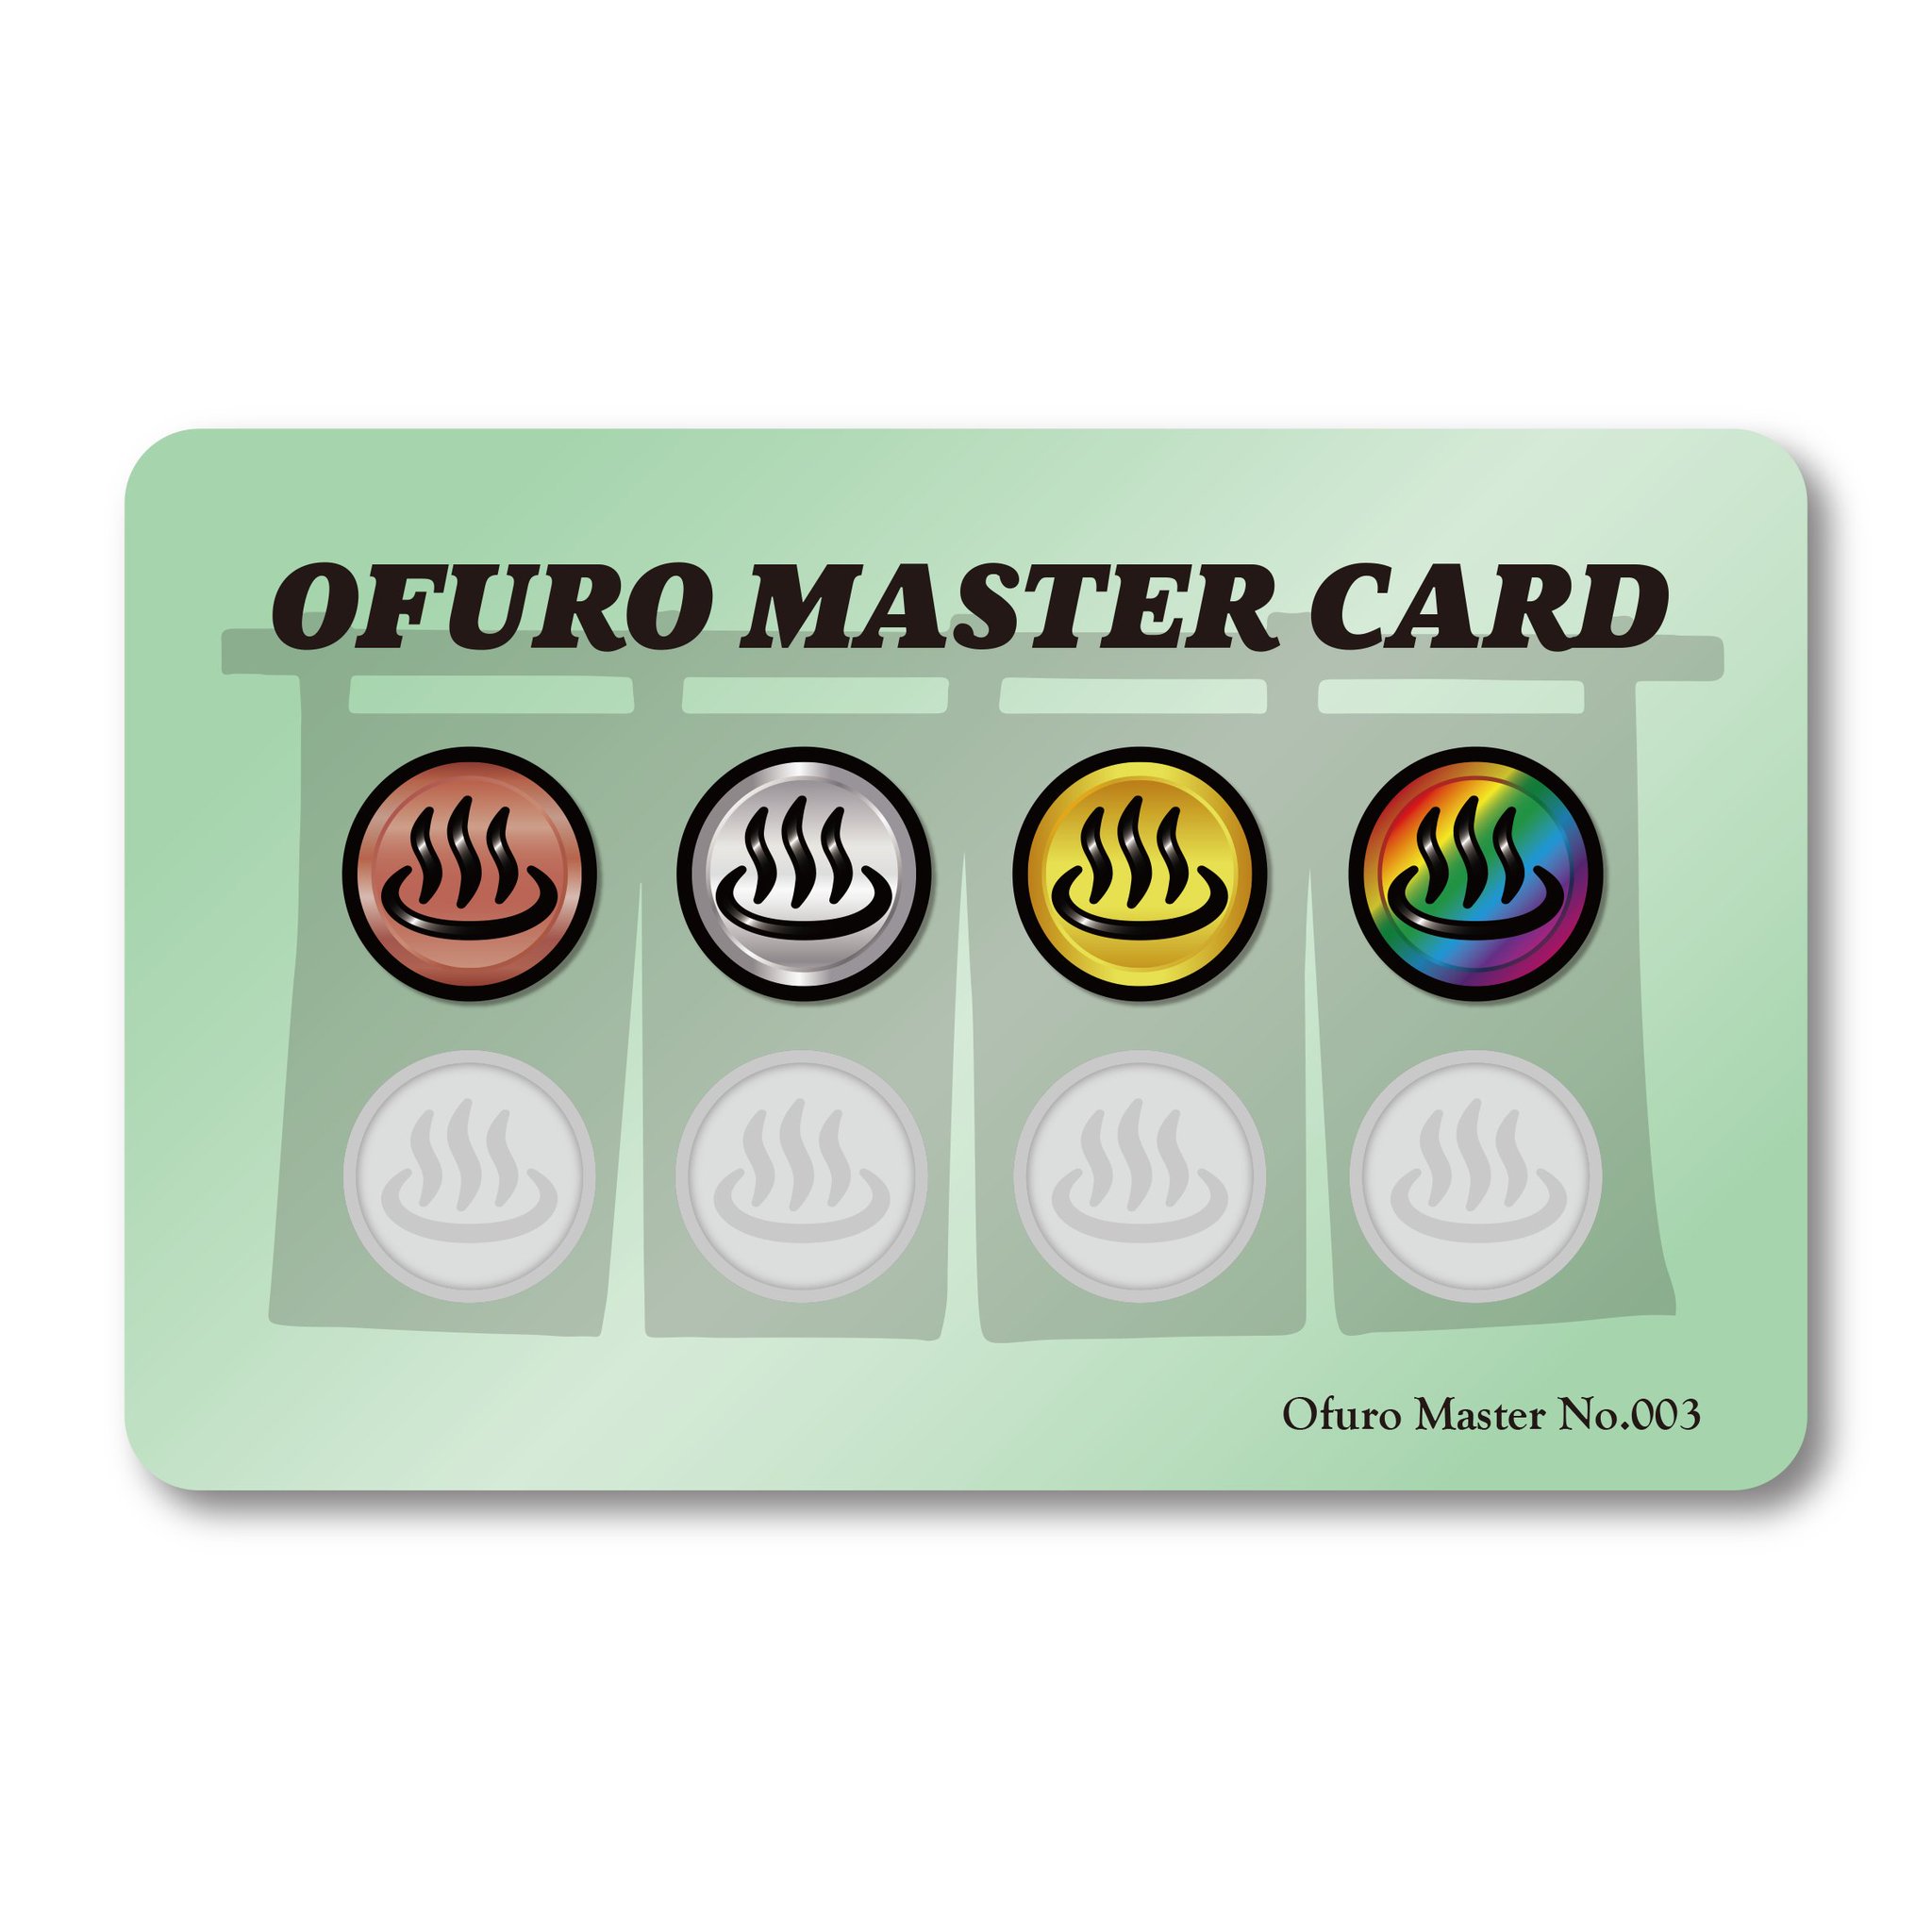 OFURO MASTER CARD 003